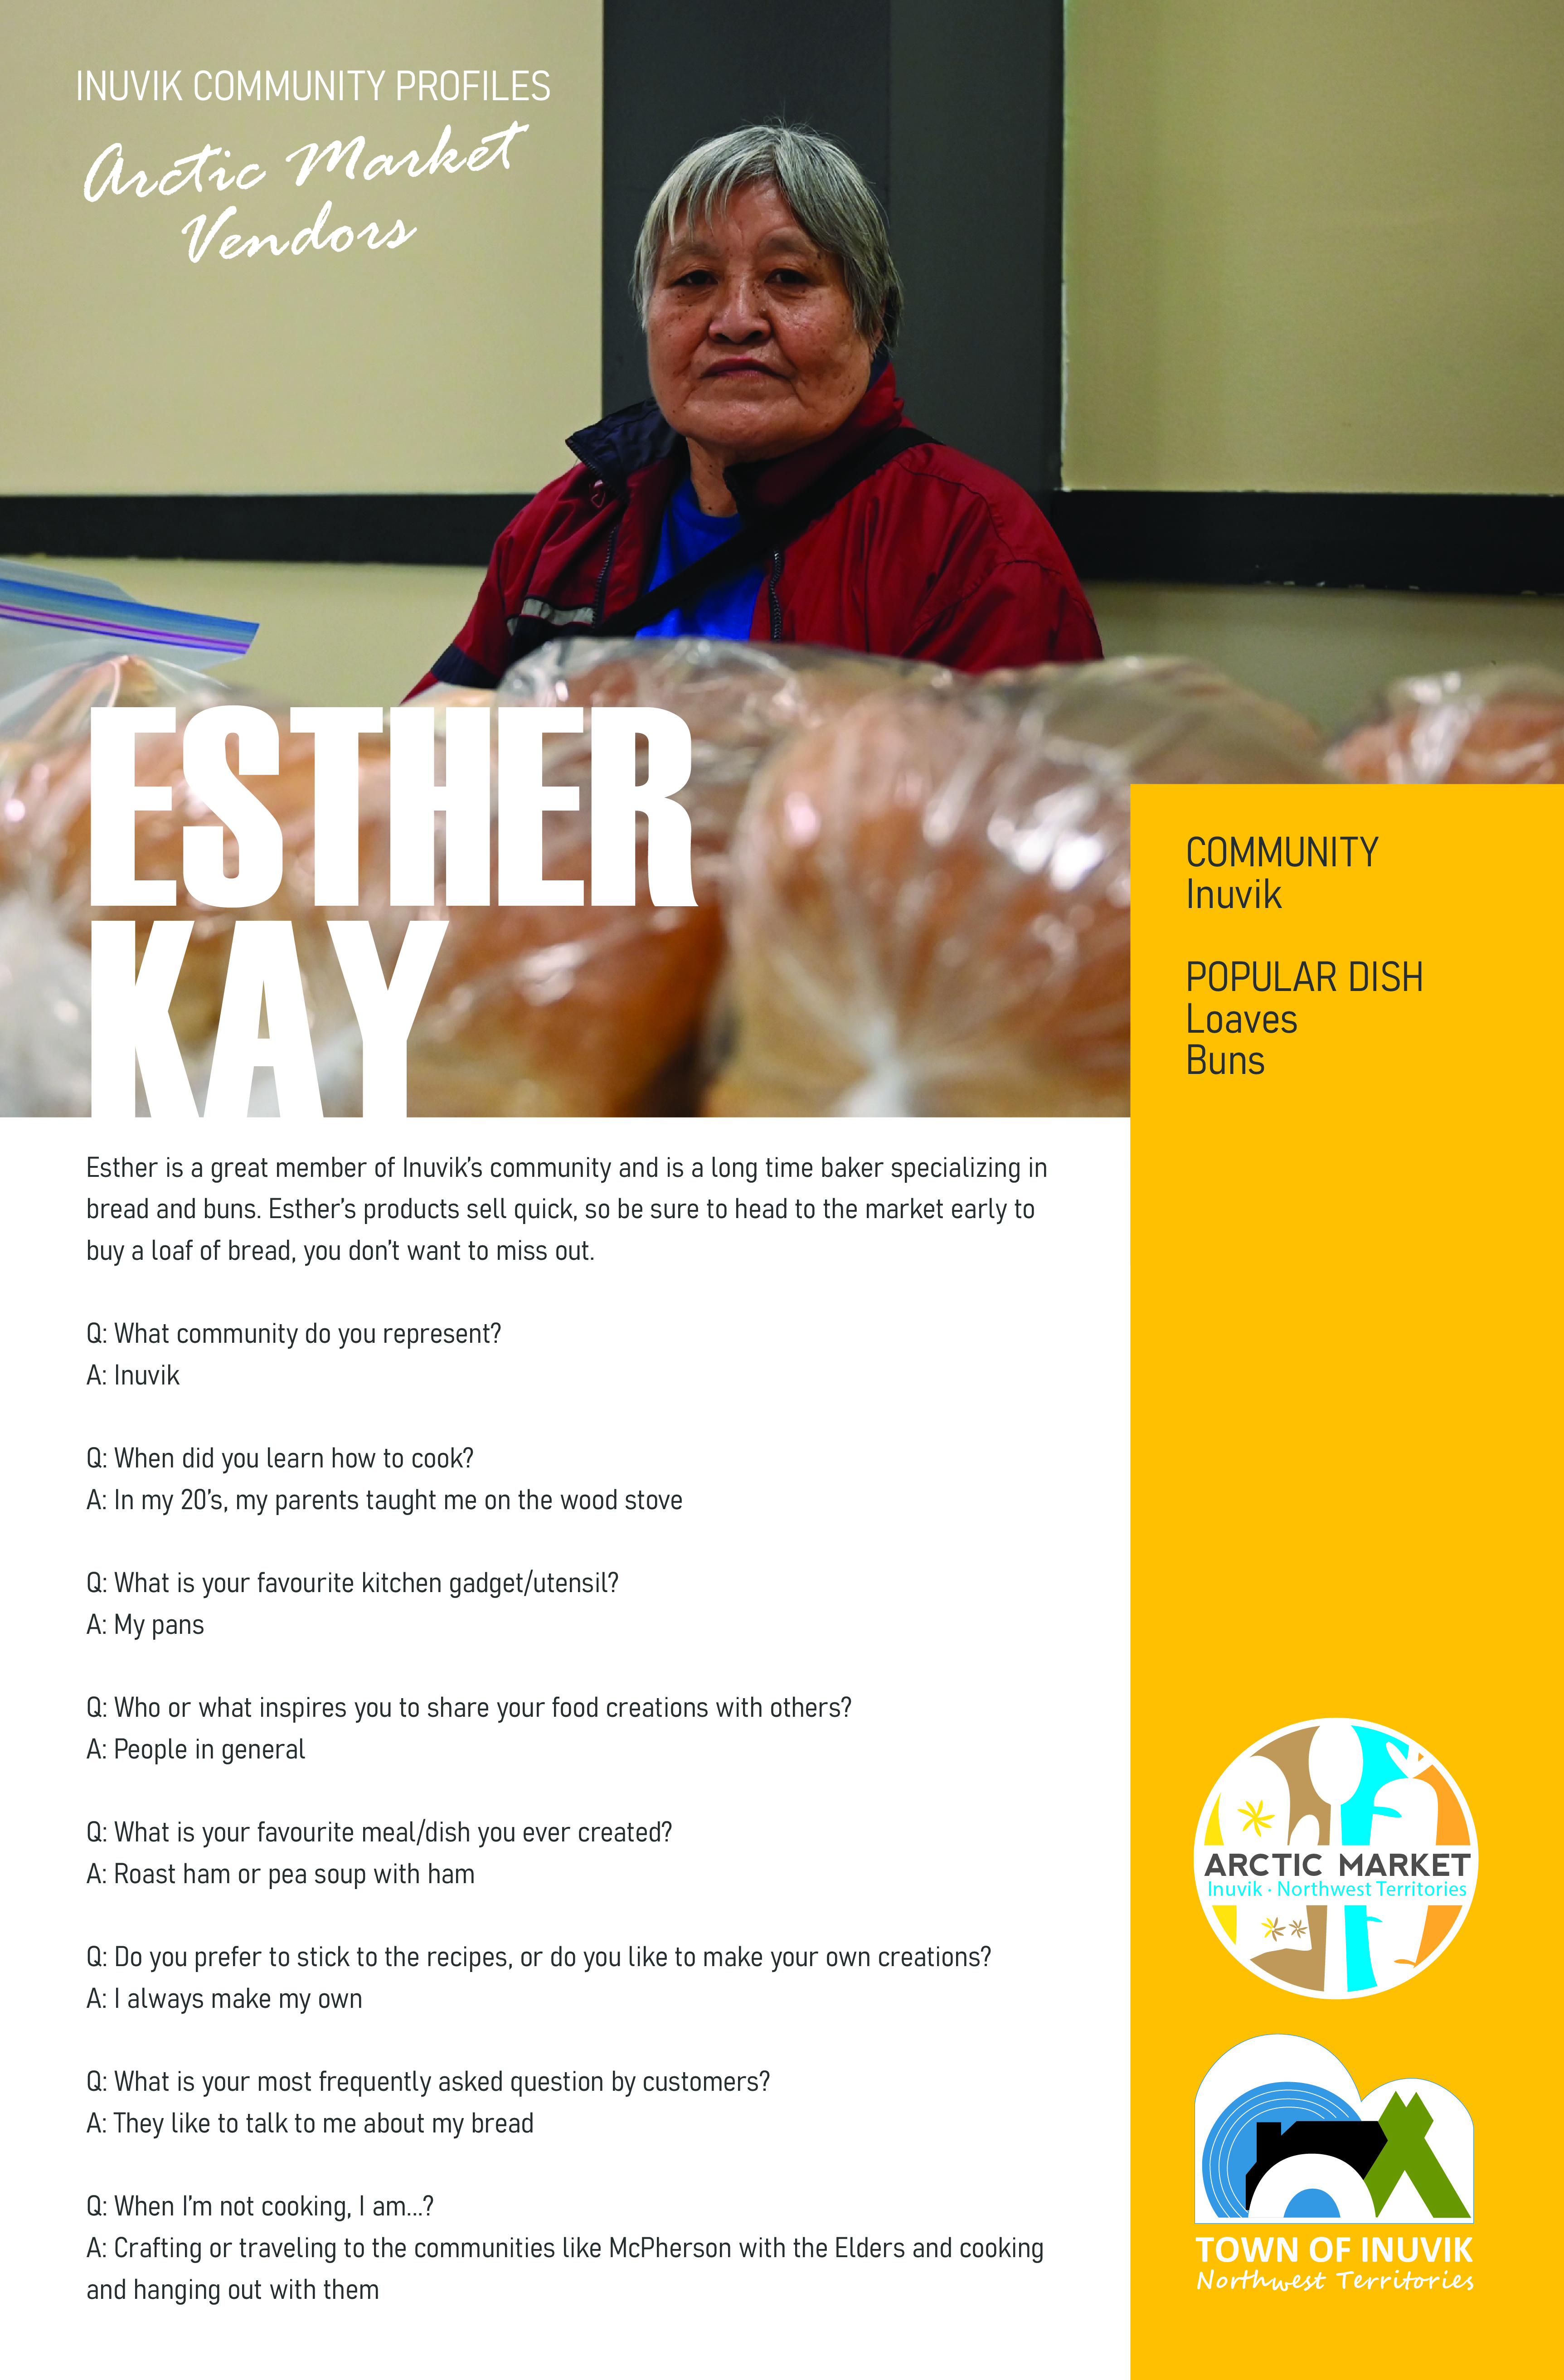 Esther Kay Food Vendor Profile